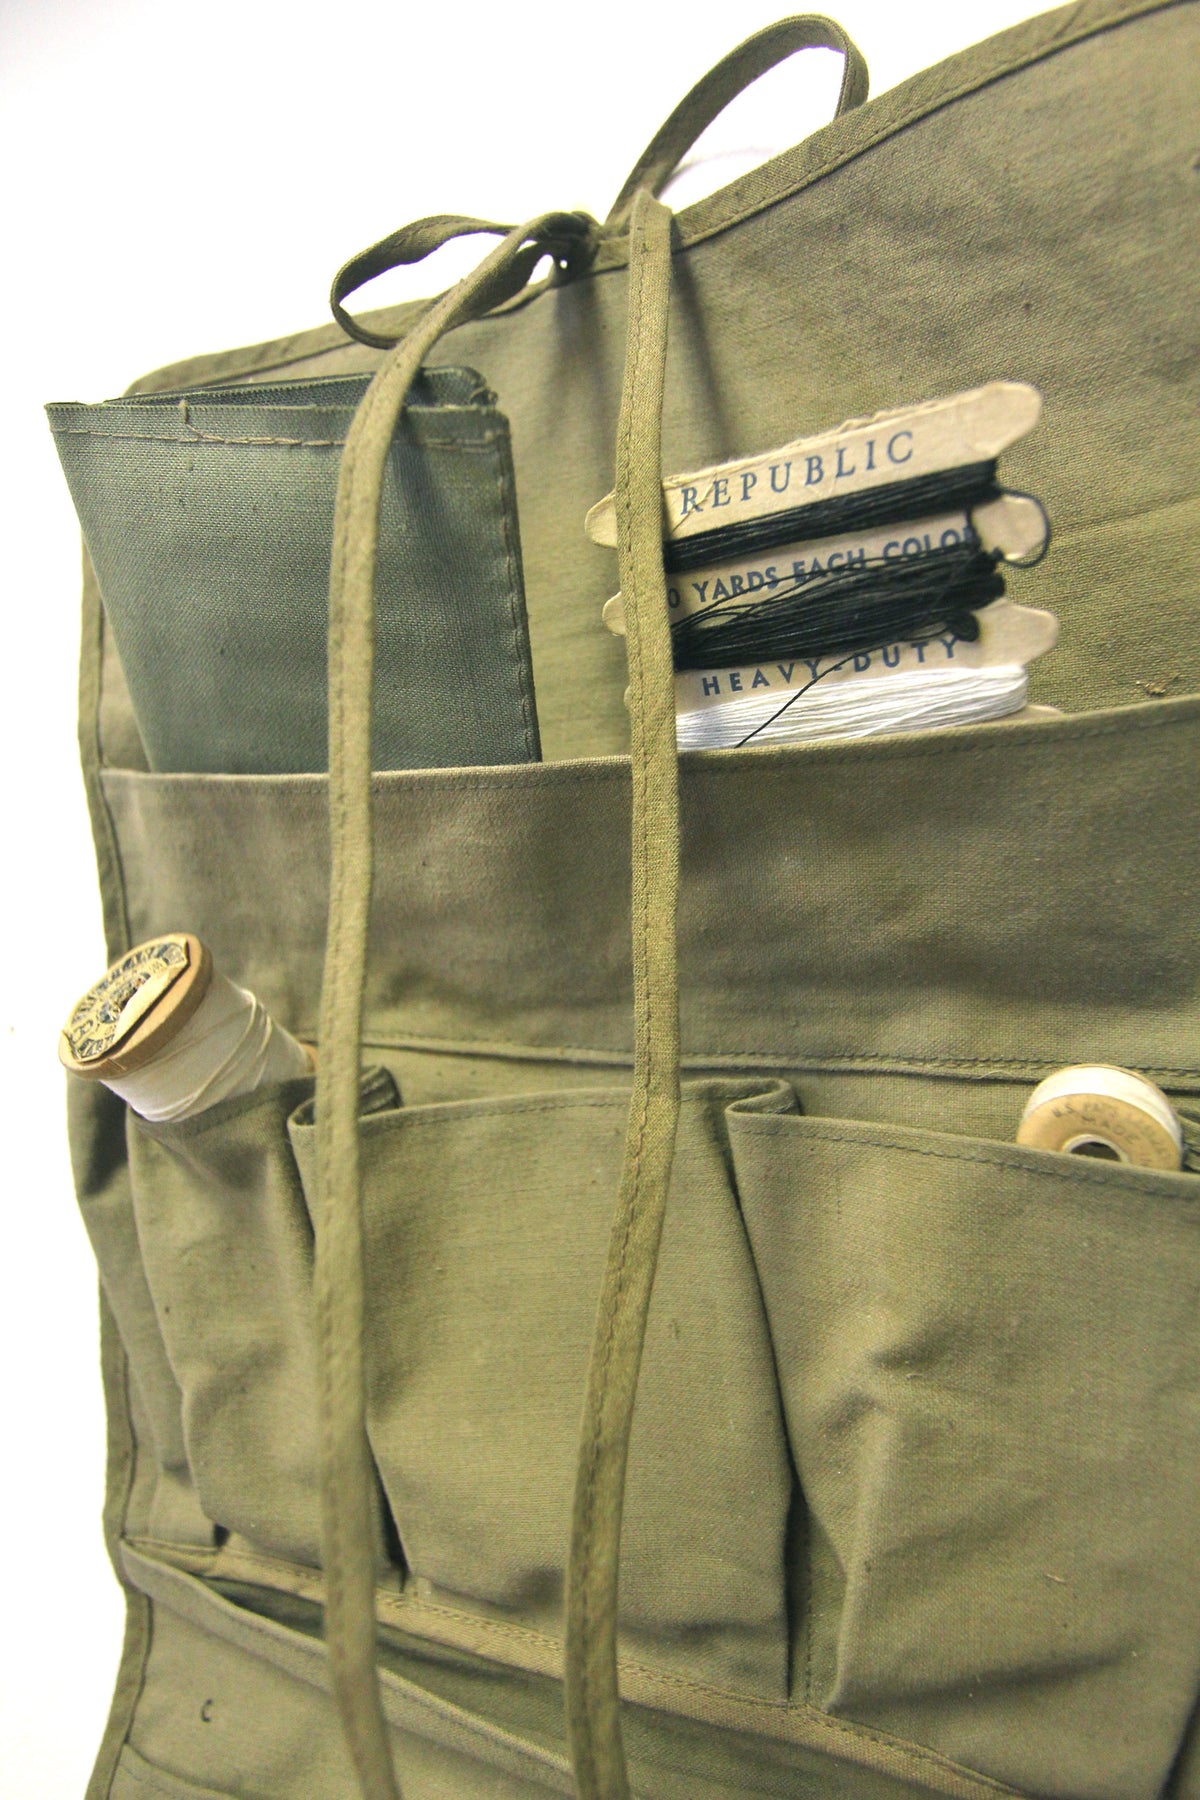 Vintage Military Sewing Kit